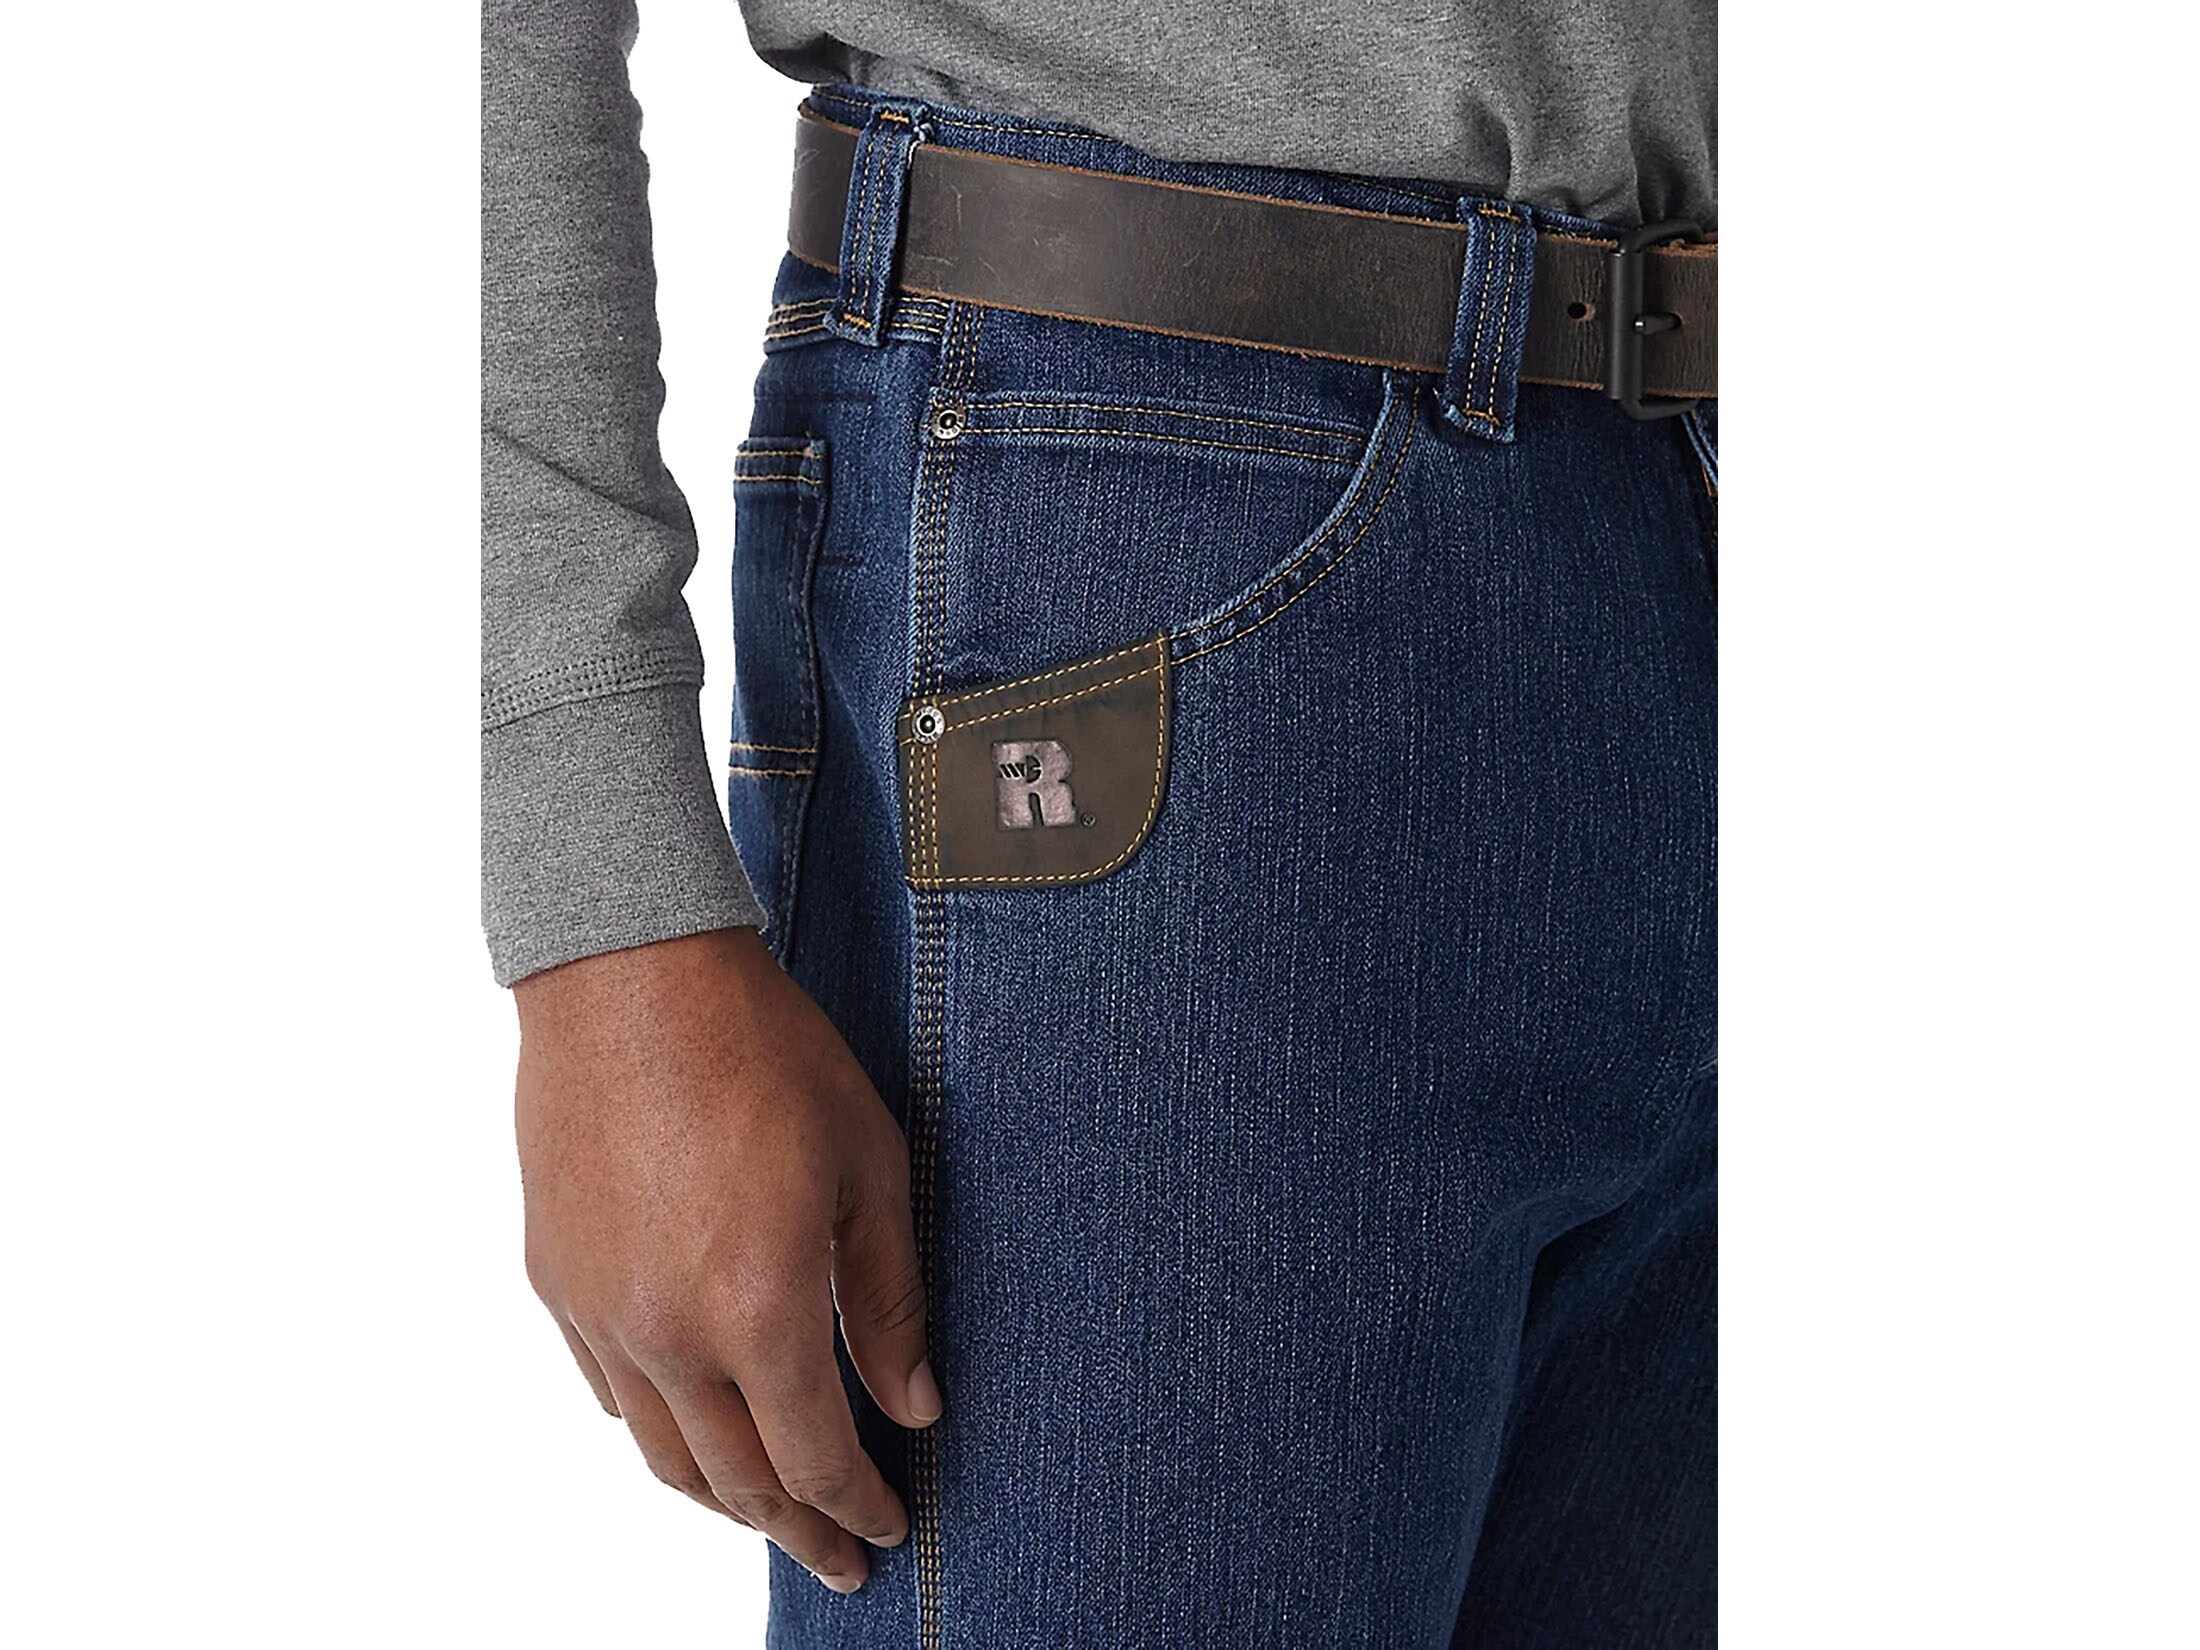 Wrangler Riggs Advanced Comfort Five Pocket Jean